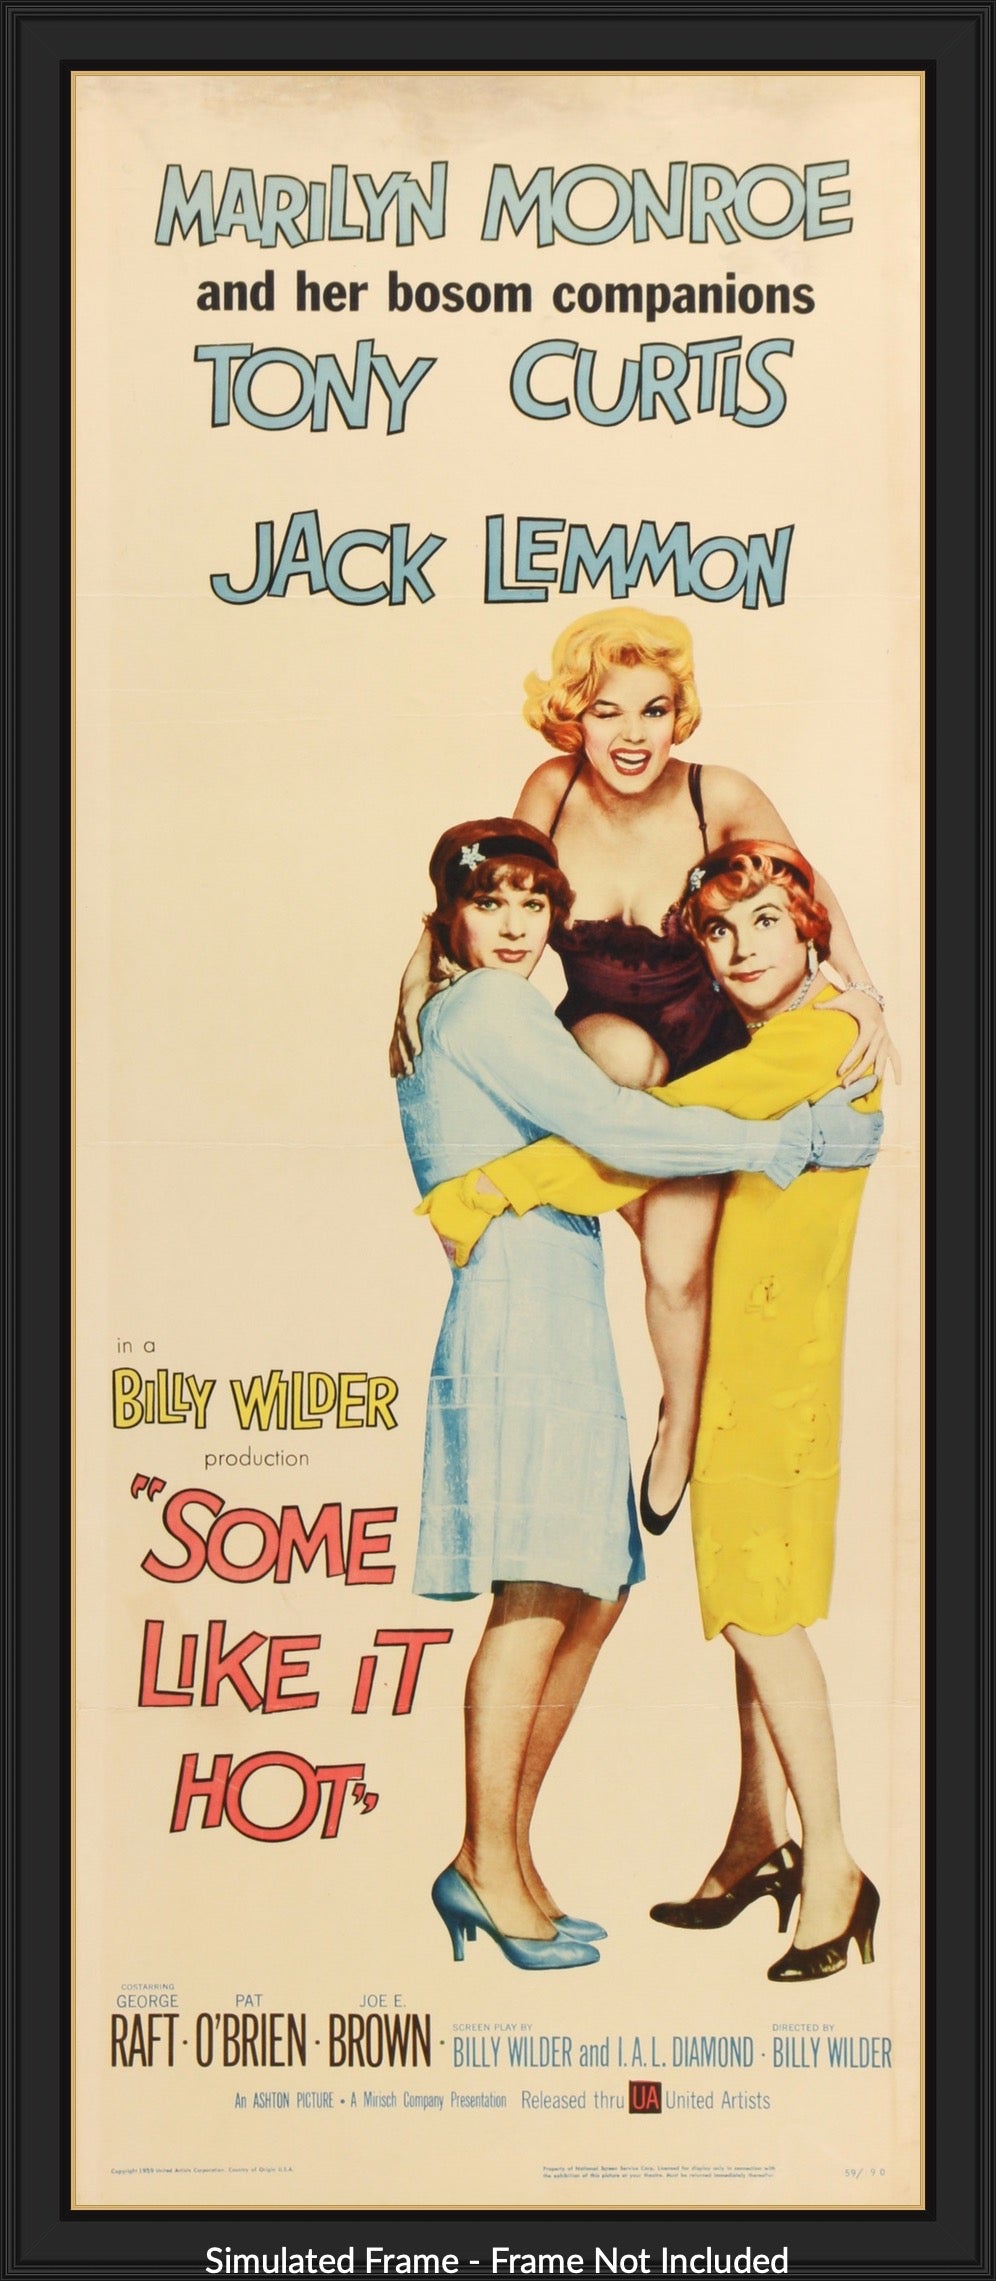 Some Like It Hot (1959) original movie poster for sale at Original Film Art